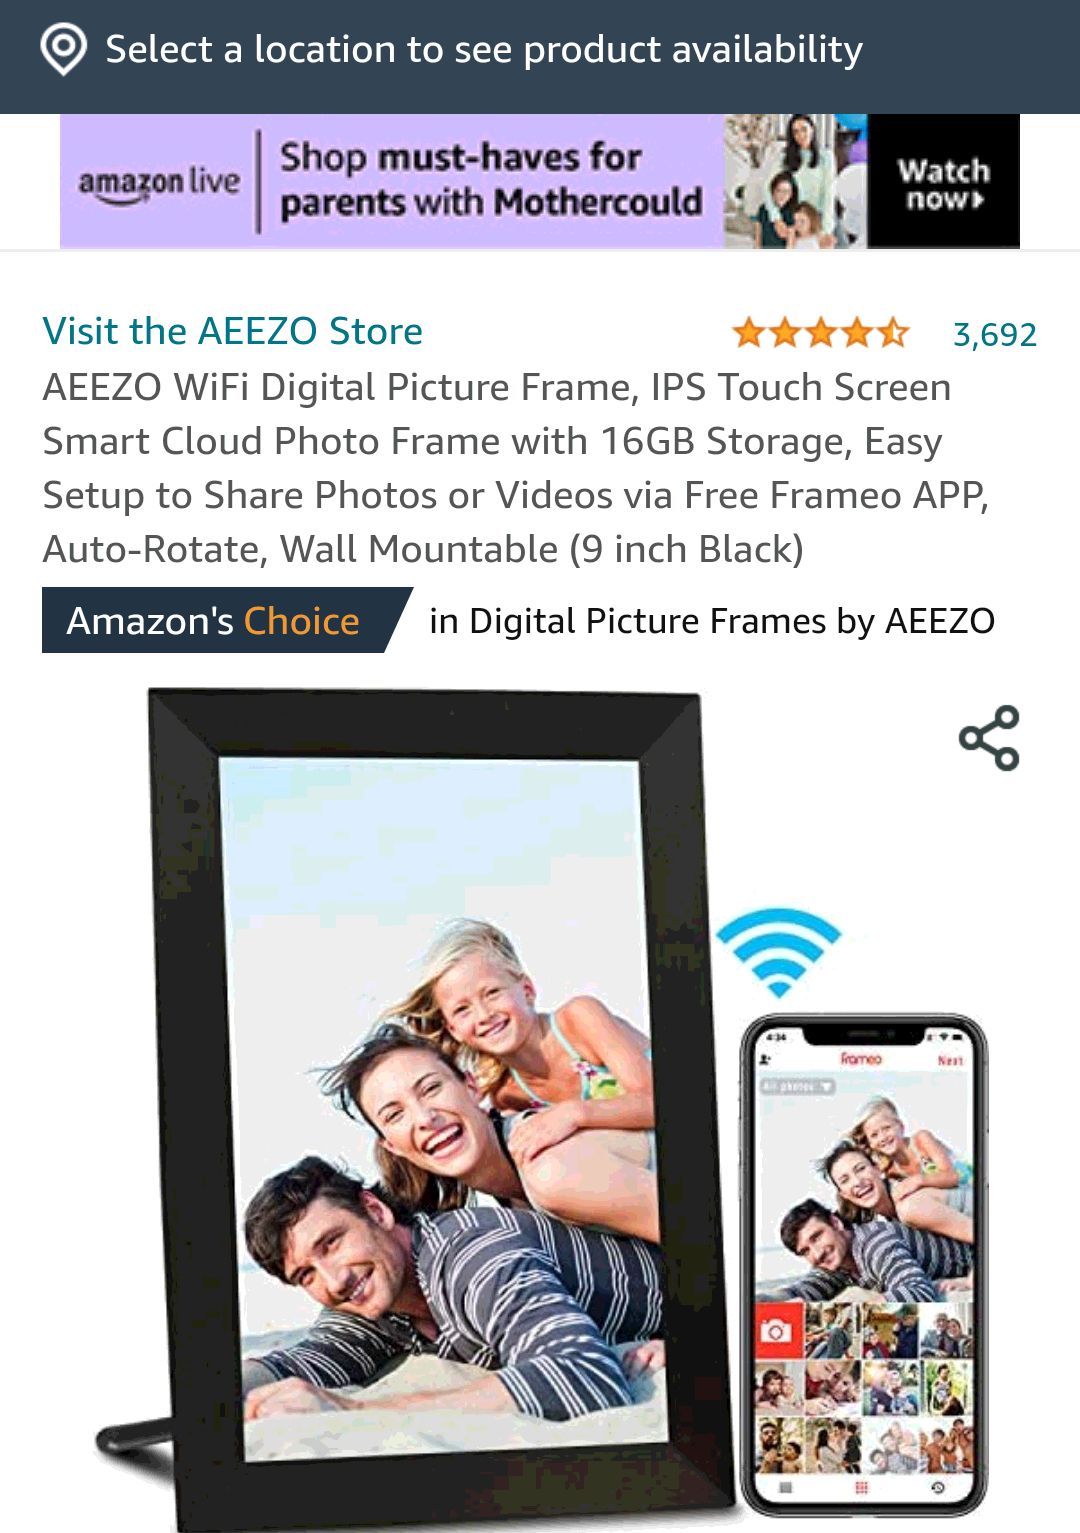 Amazon.com：AEEZO WiFi 数码相框，IPS 触摸屏智能云相框，16GB 存储空间，通过免费 Frameo APP 轻松设置分享照片或视频，自动旋转，壁挂式